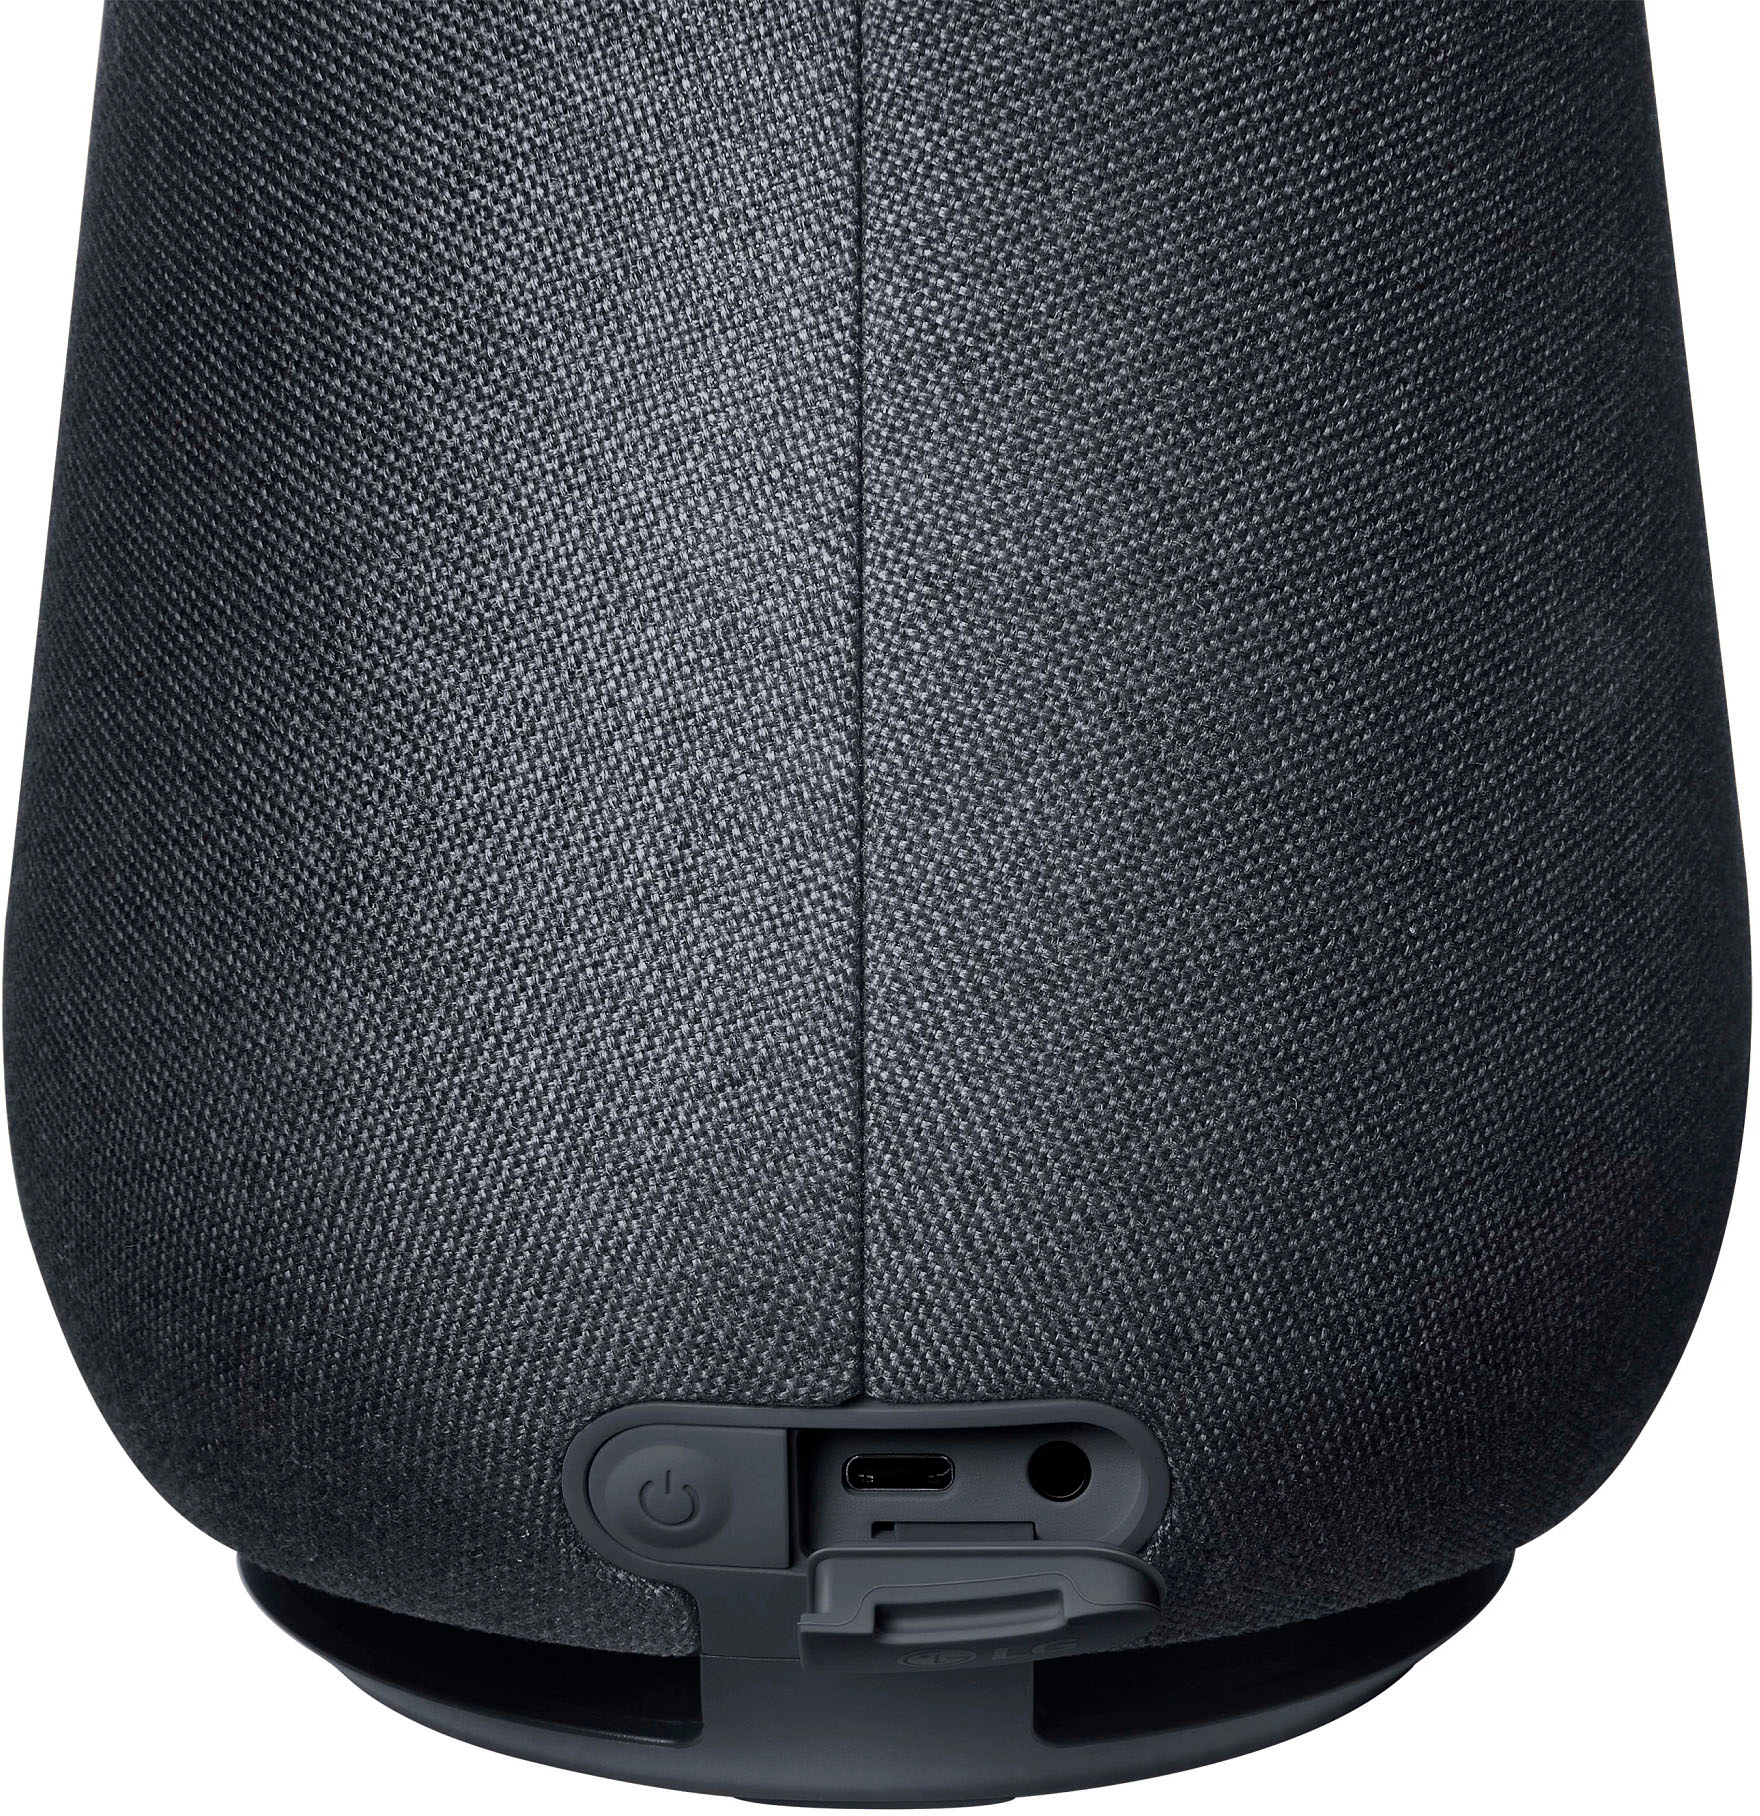 XBOOM Buy Speaker LG Bluetooth Black - 360 Portable XO3QBK Best